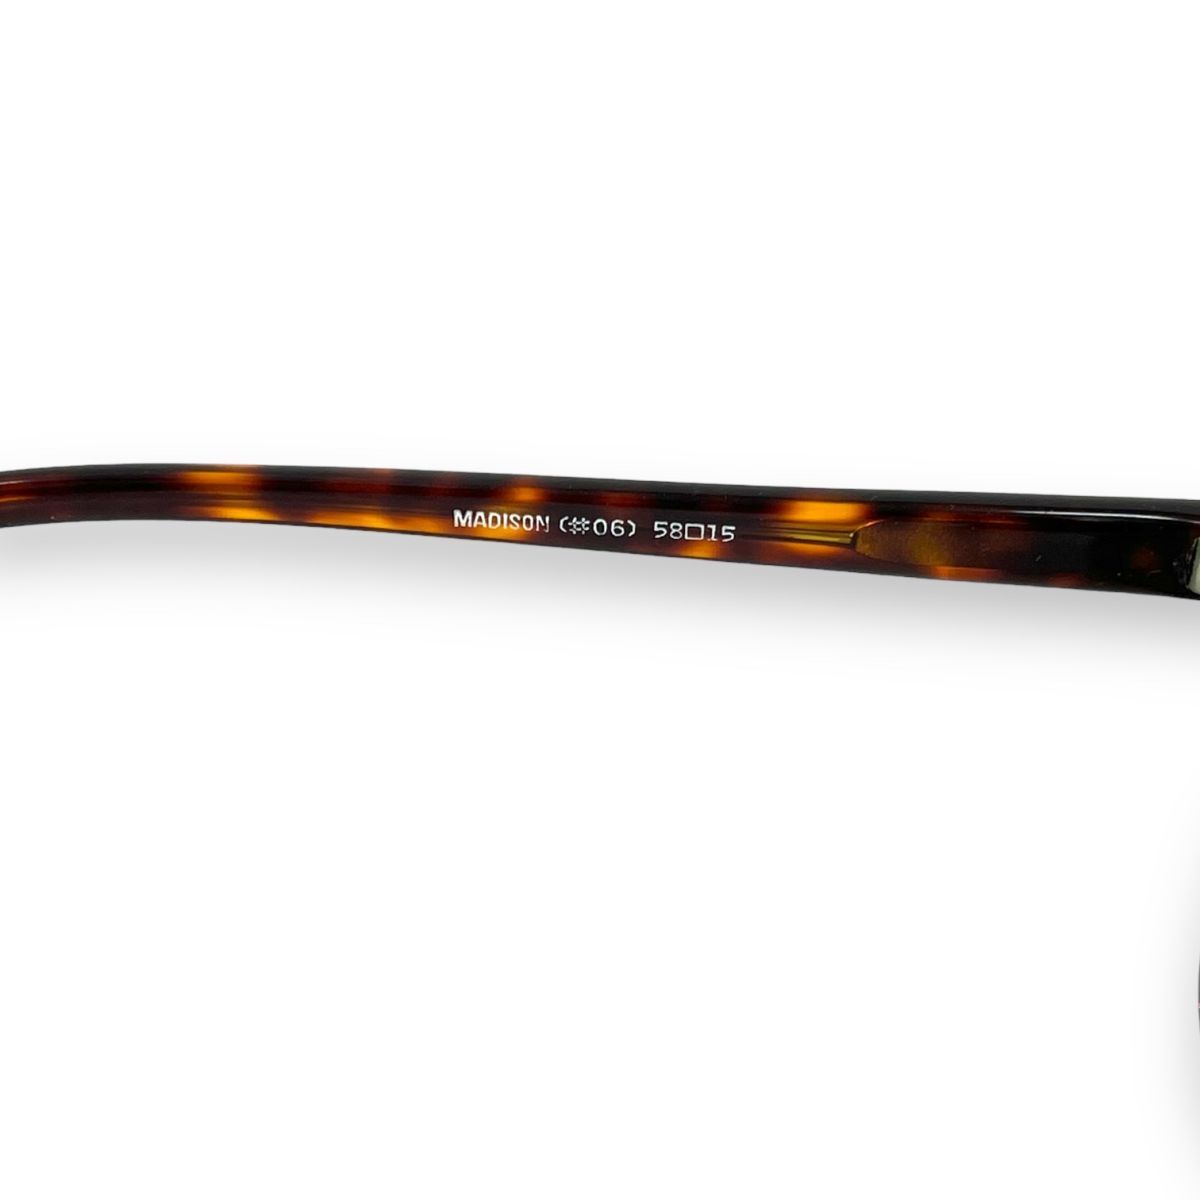 Ray-Ban RayBan солнцезащитные очки очки I одежда мода бренд с футляром TRADITIONALS традиционный MADISON #06 панцирь черепахи 